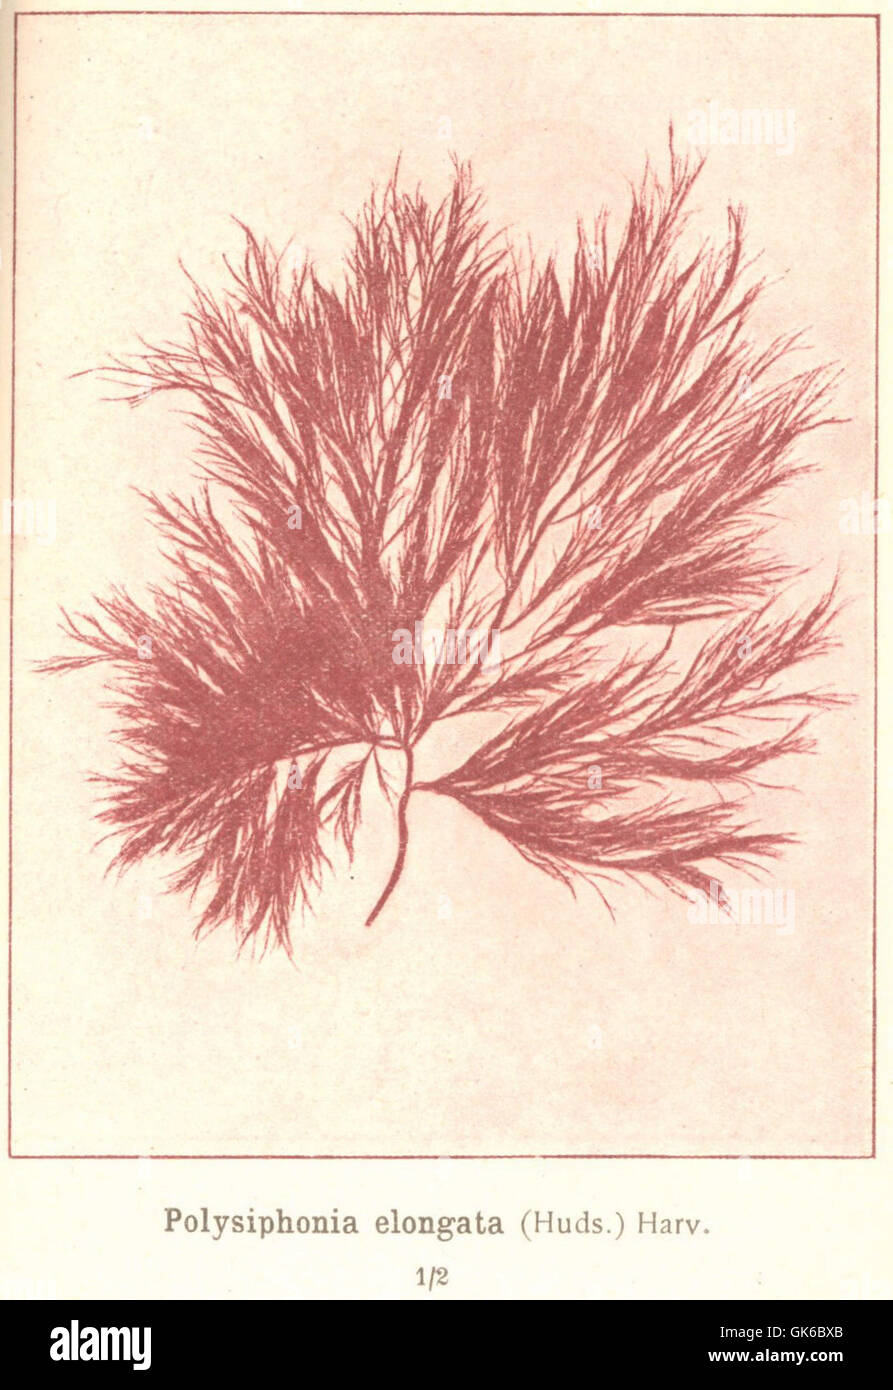 53660 Rhodophycees ou Floridees (Algues rouges) Rhodomelees, Polysiphonia elongata (Huds) Harv Stock Photo